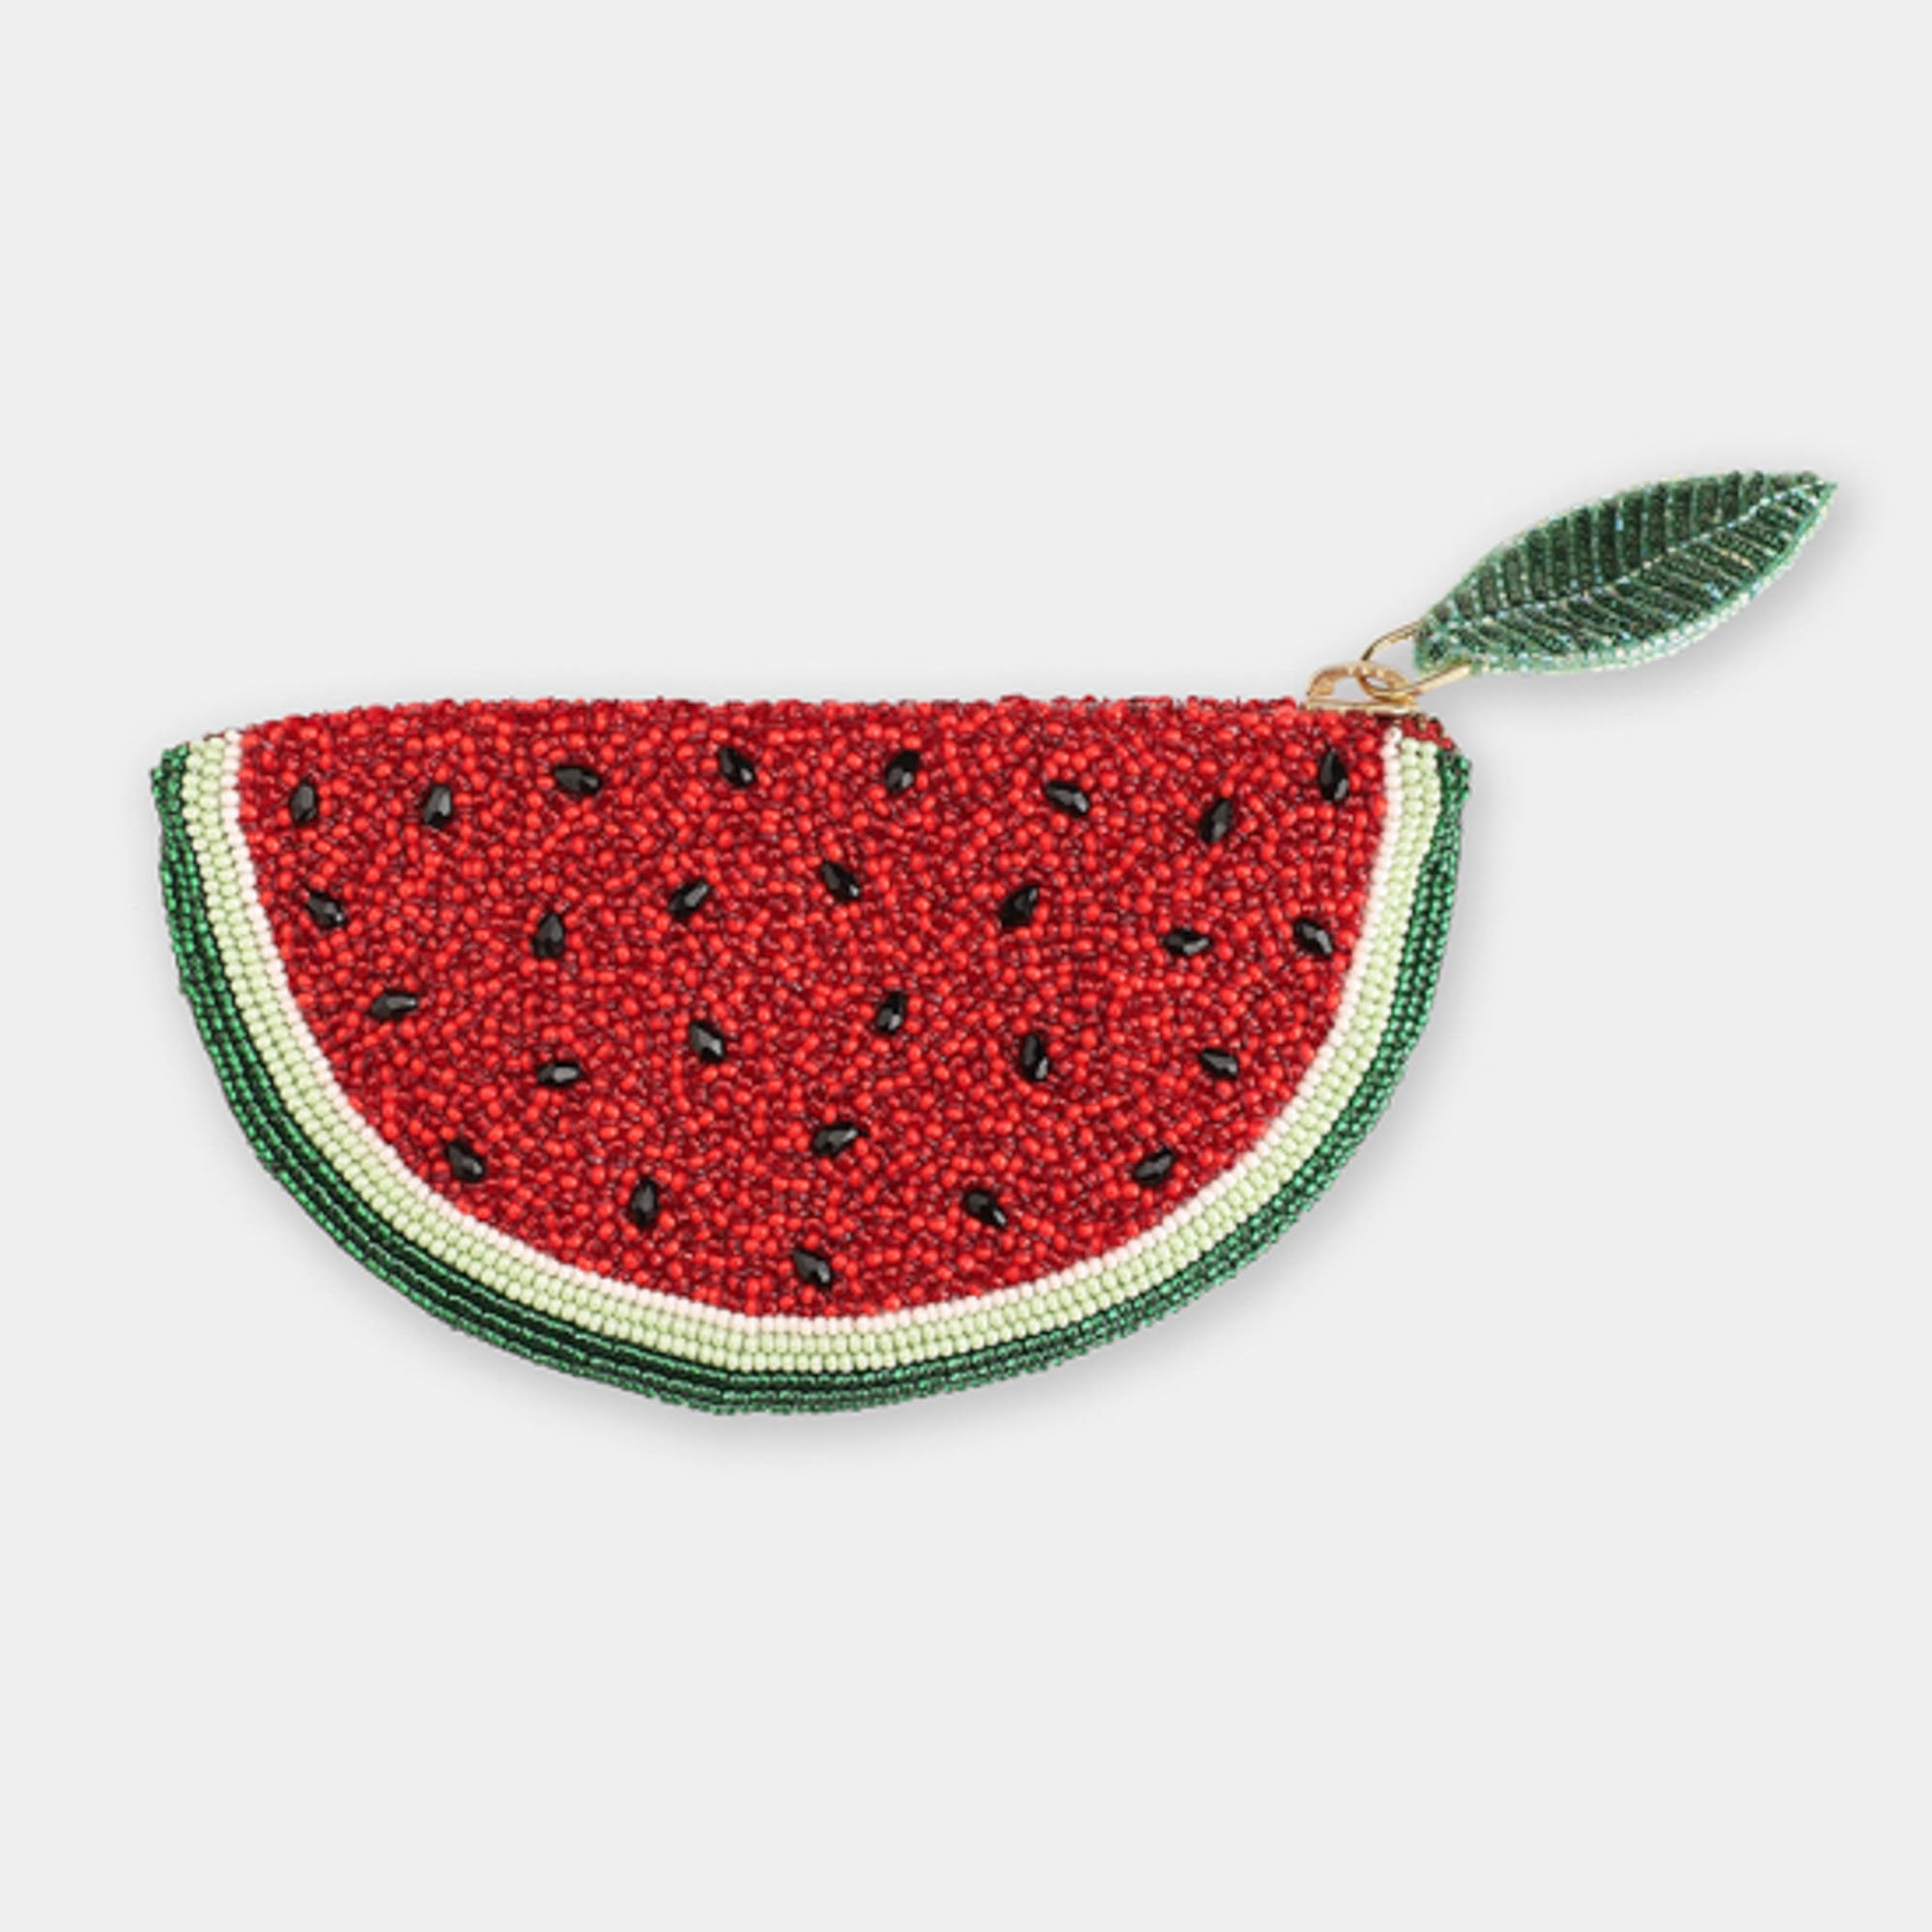 Crochet Watermelon Drawstring Coin Pouch | Crochet Coin Purse - YouTube